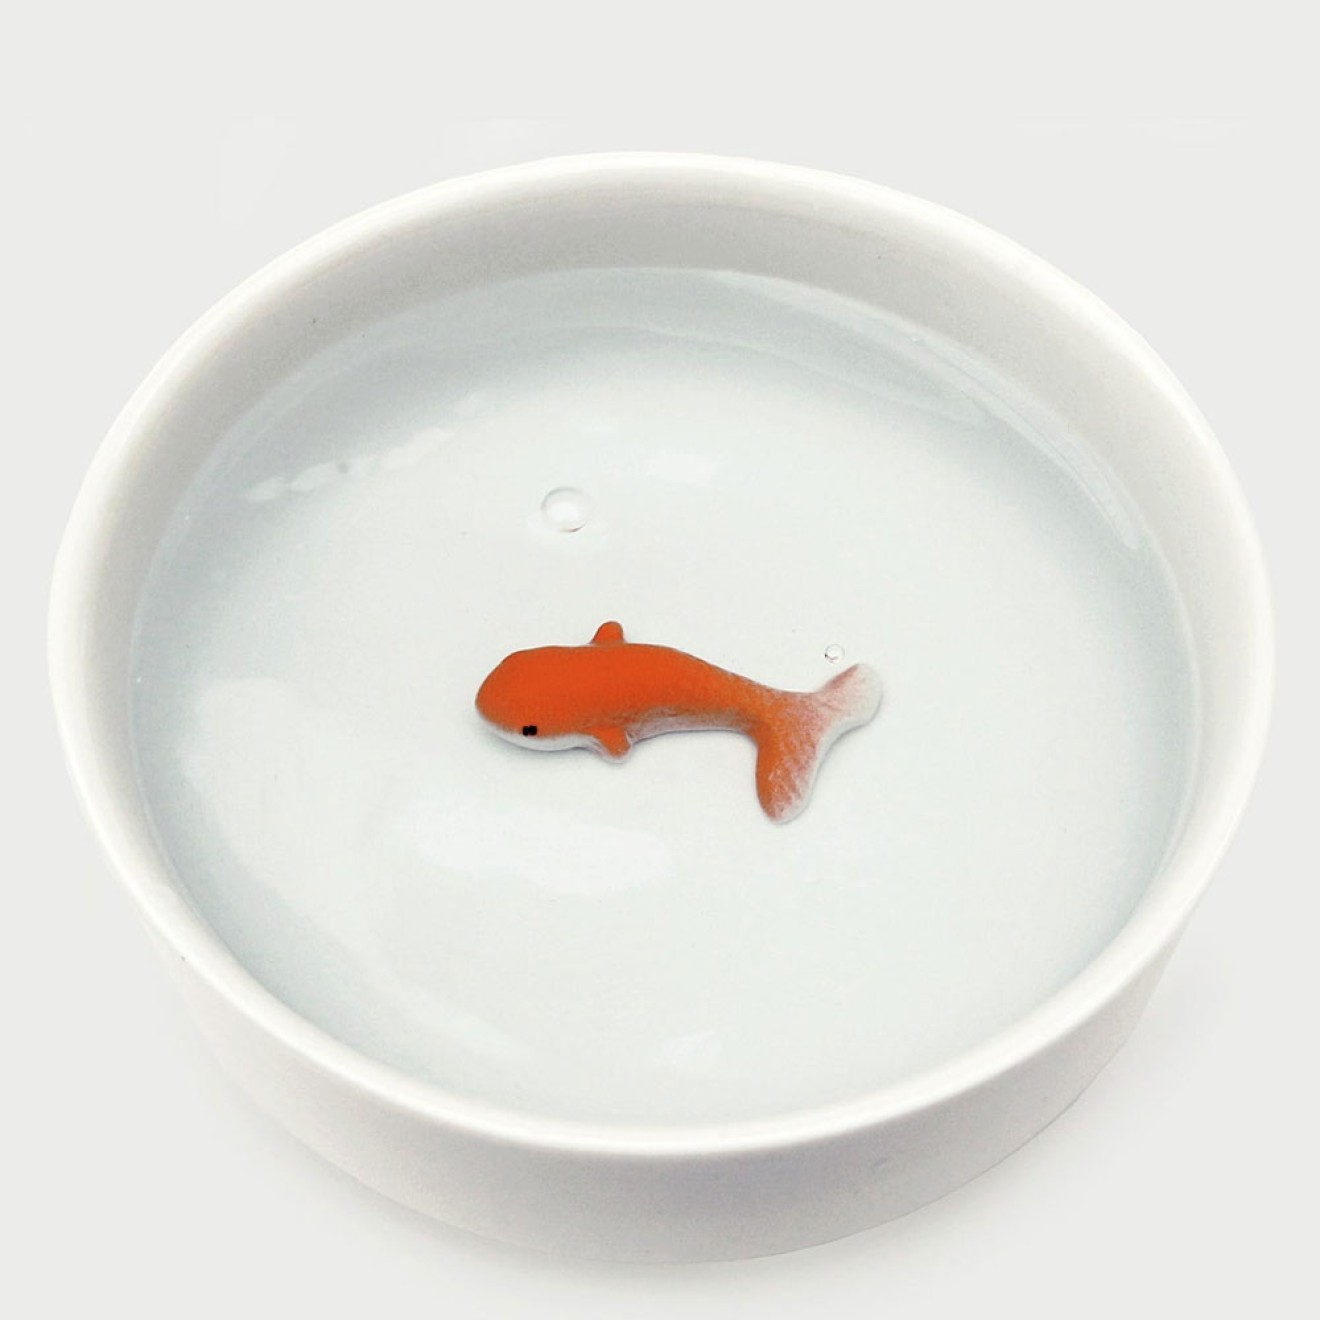 Designer-Napf mit Fisch in 3D-Optik